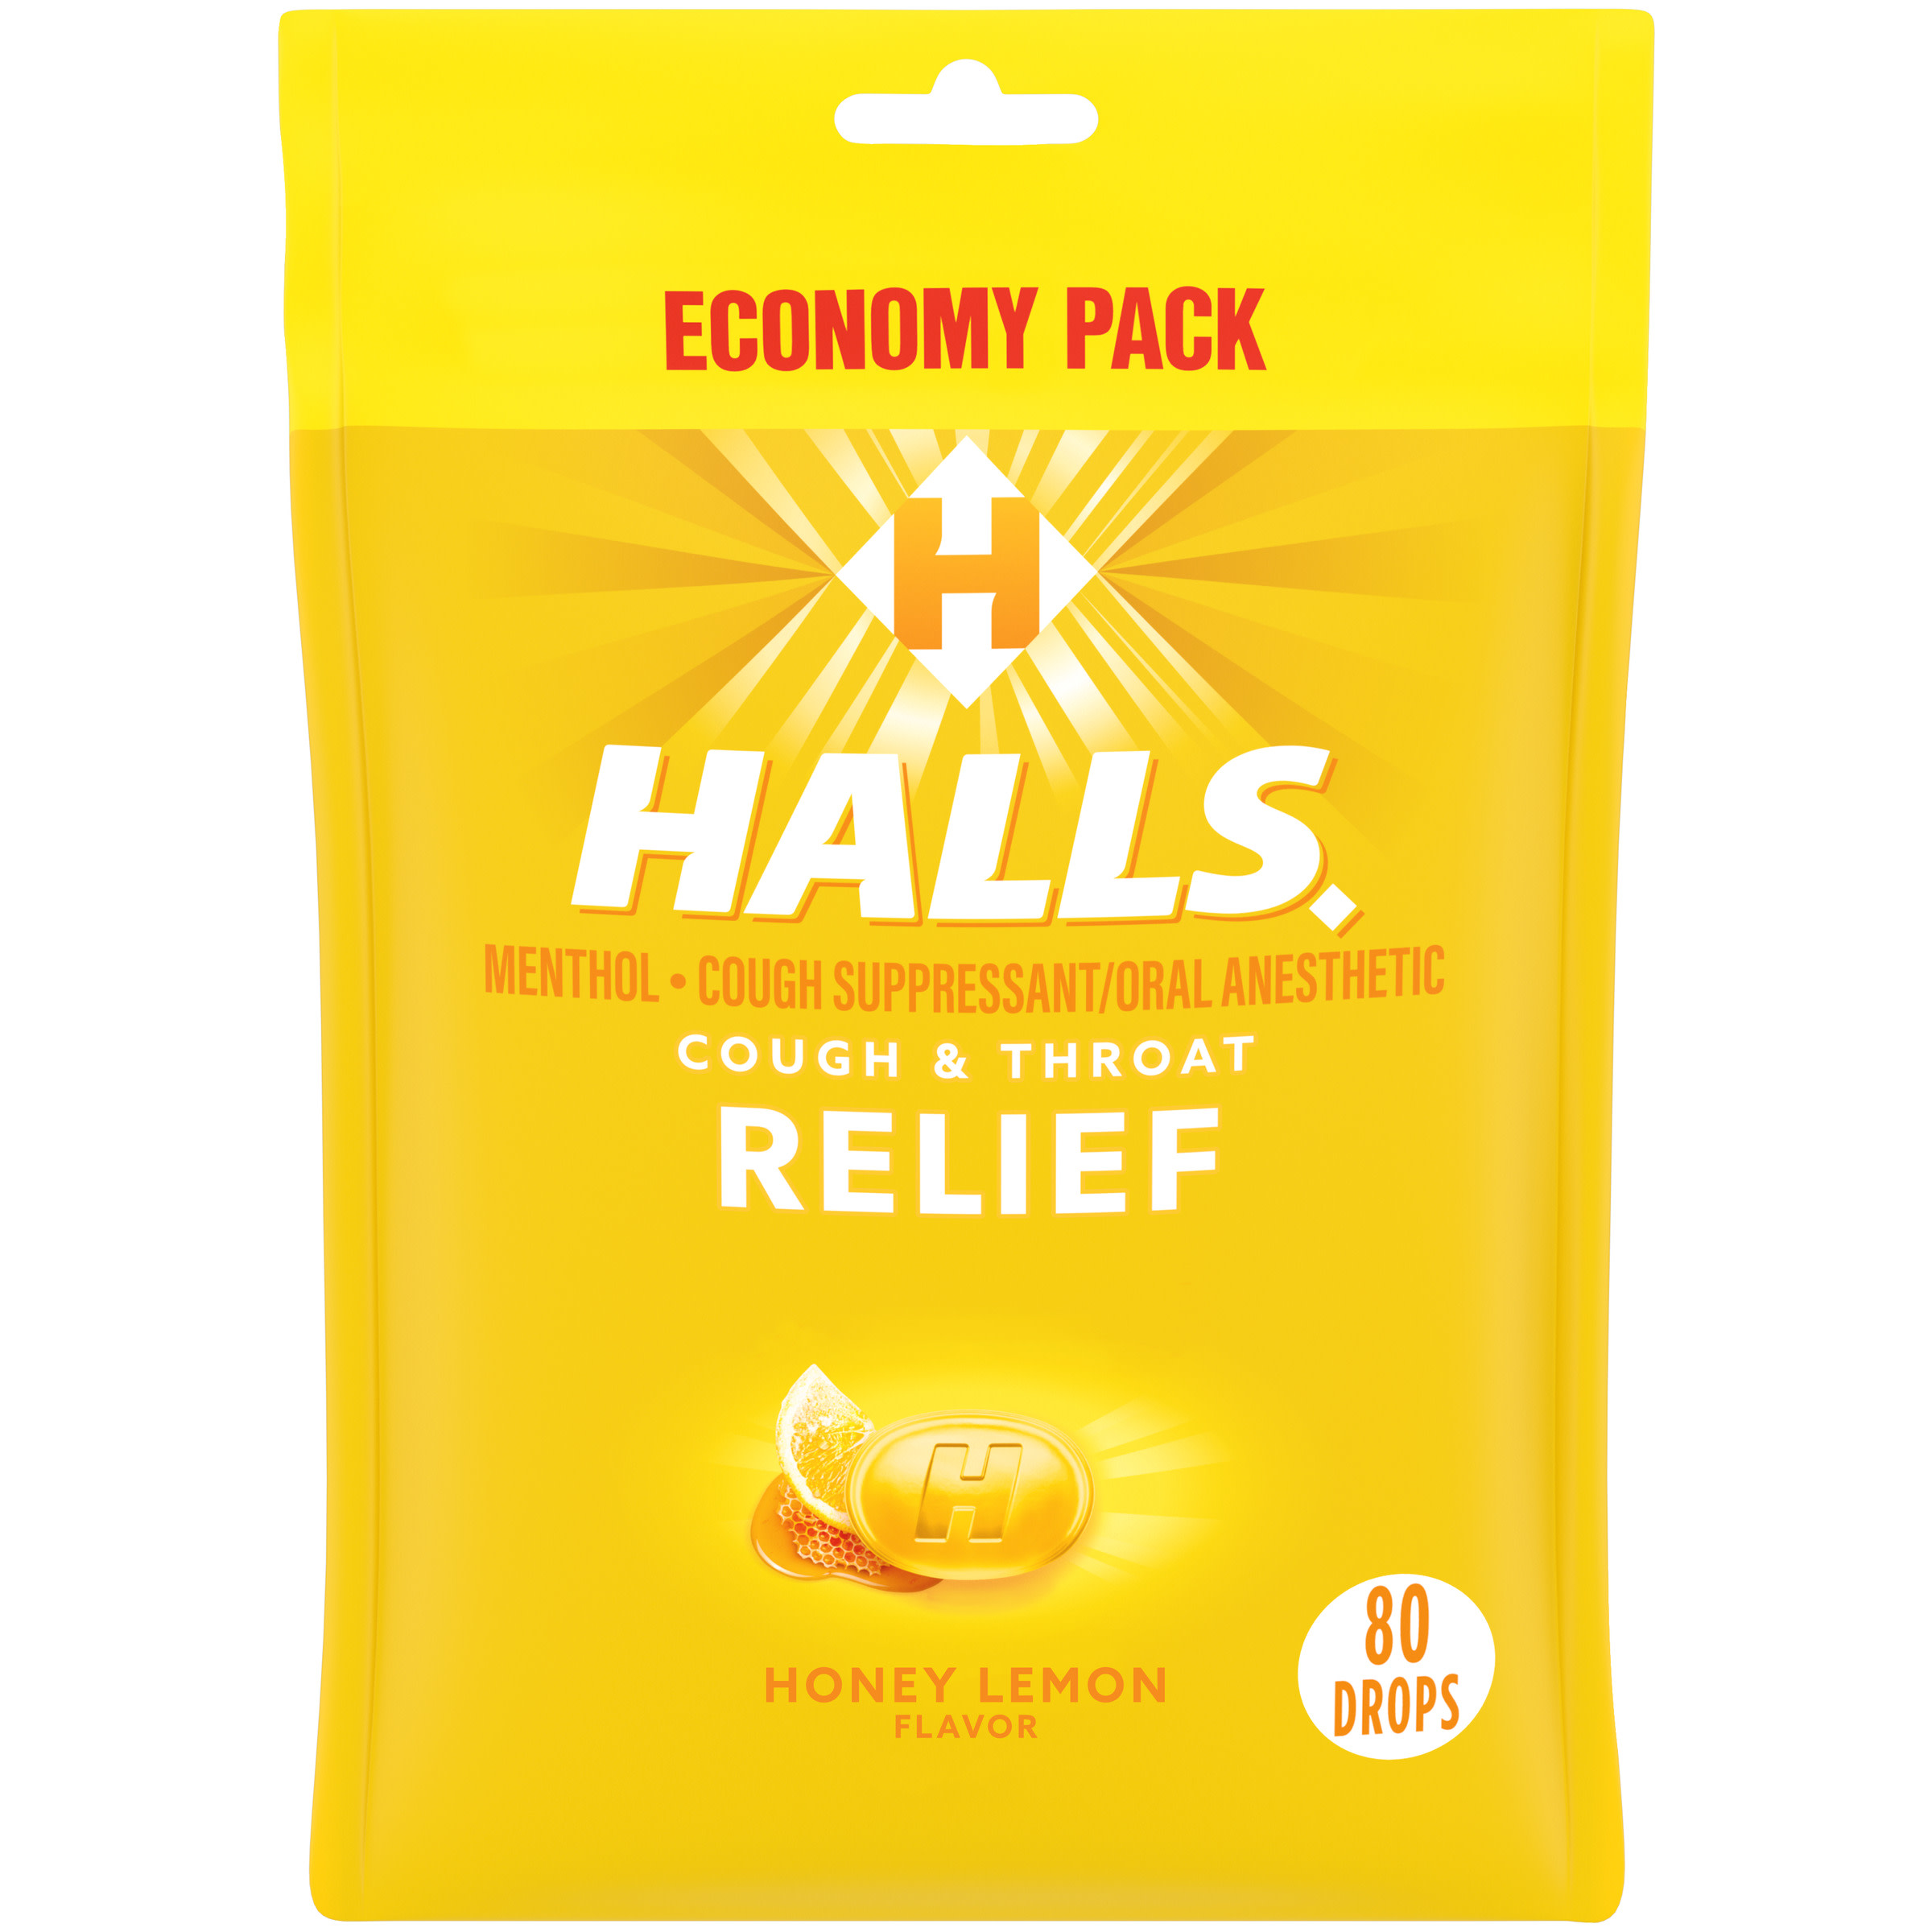 HALLS Relief Honey Lemon Cough Drops, Economy Pack, 80 Drops - image 1 of 12